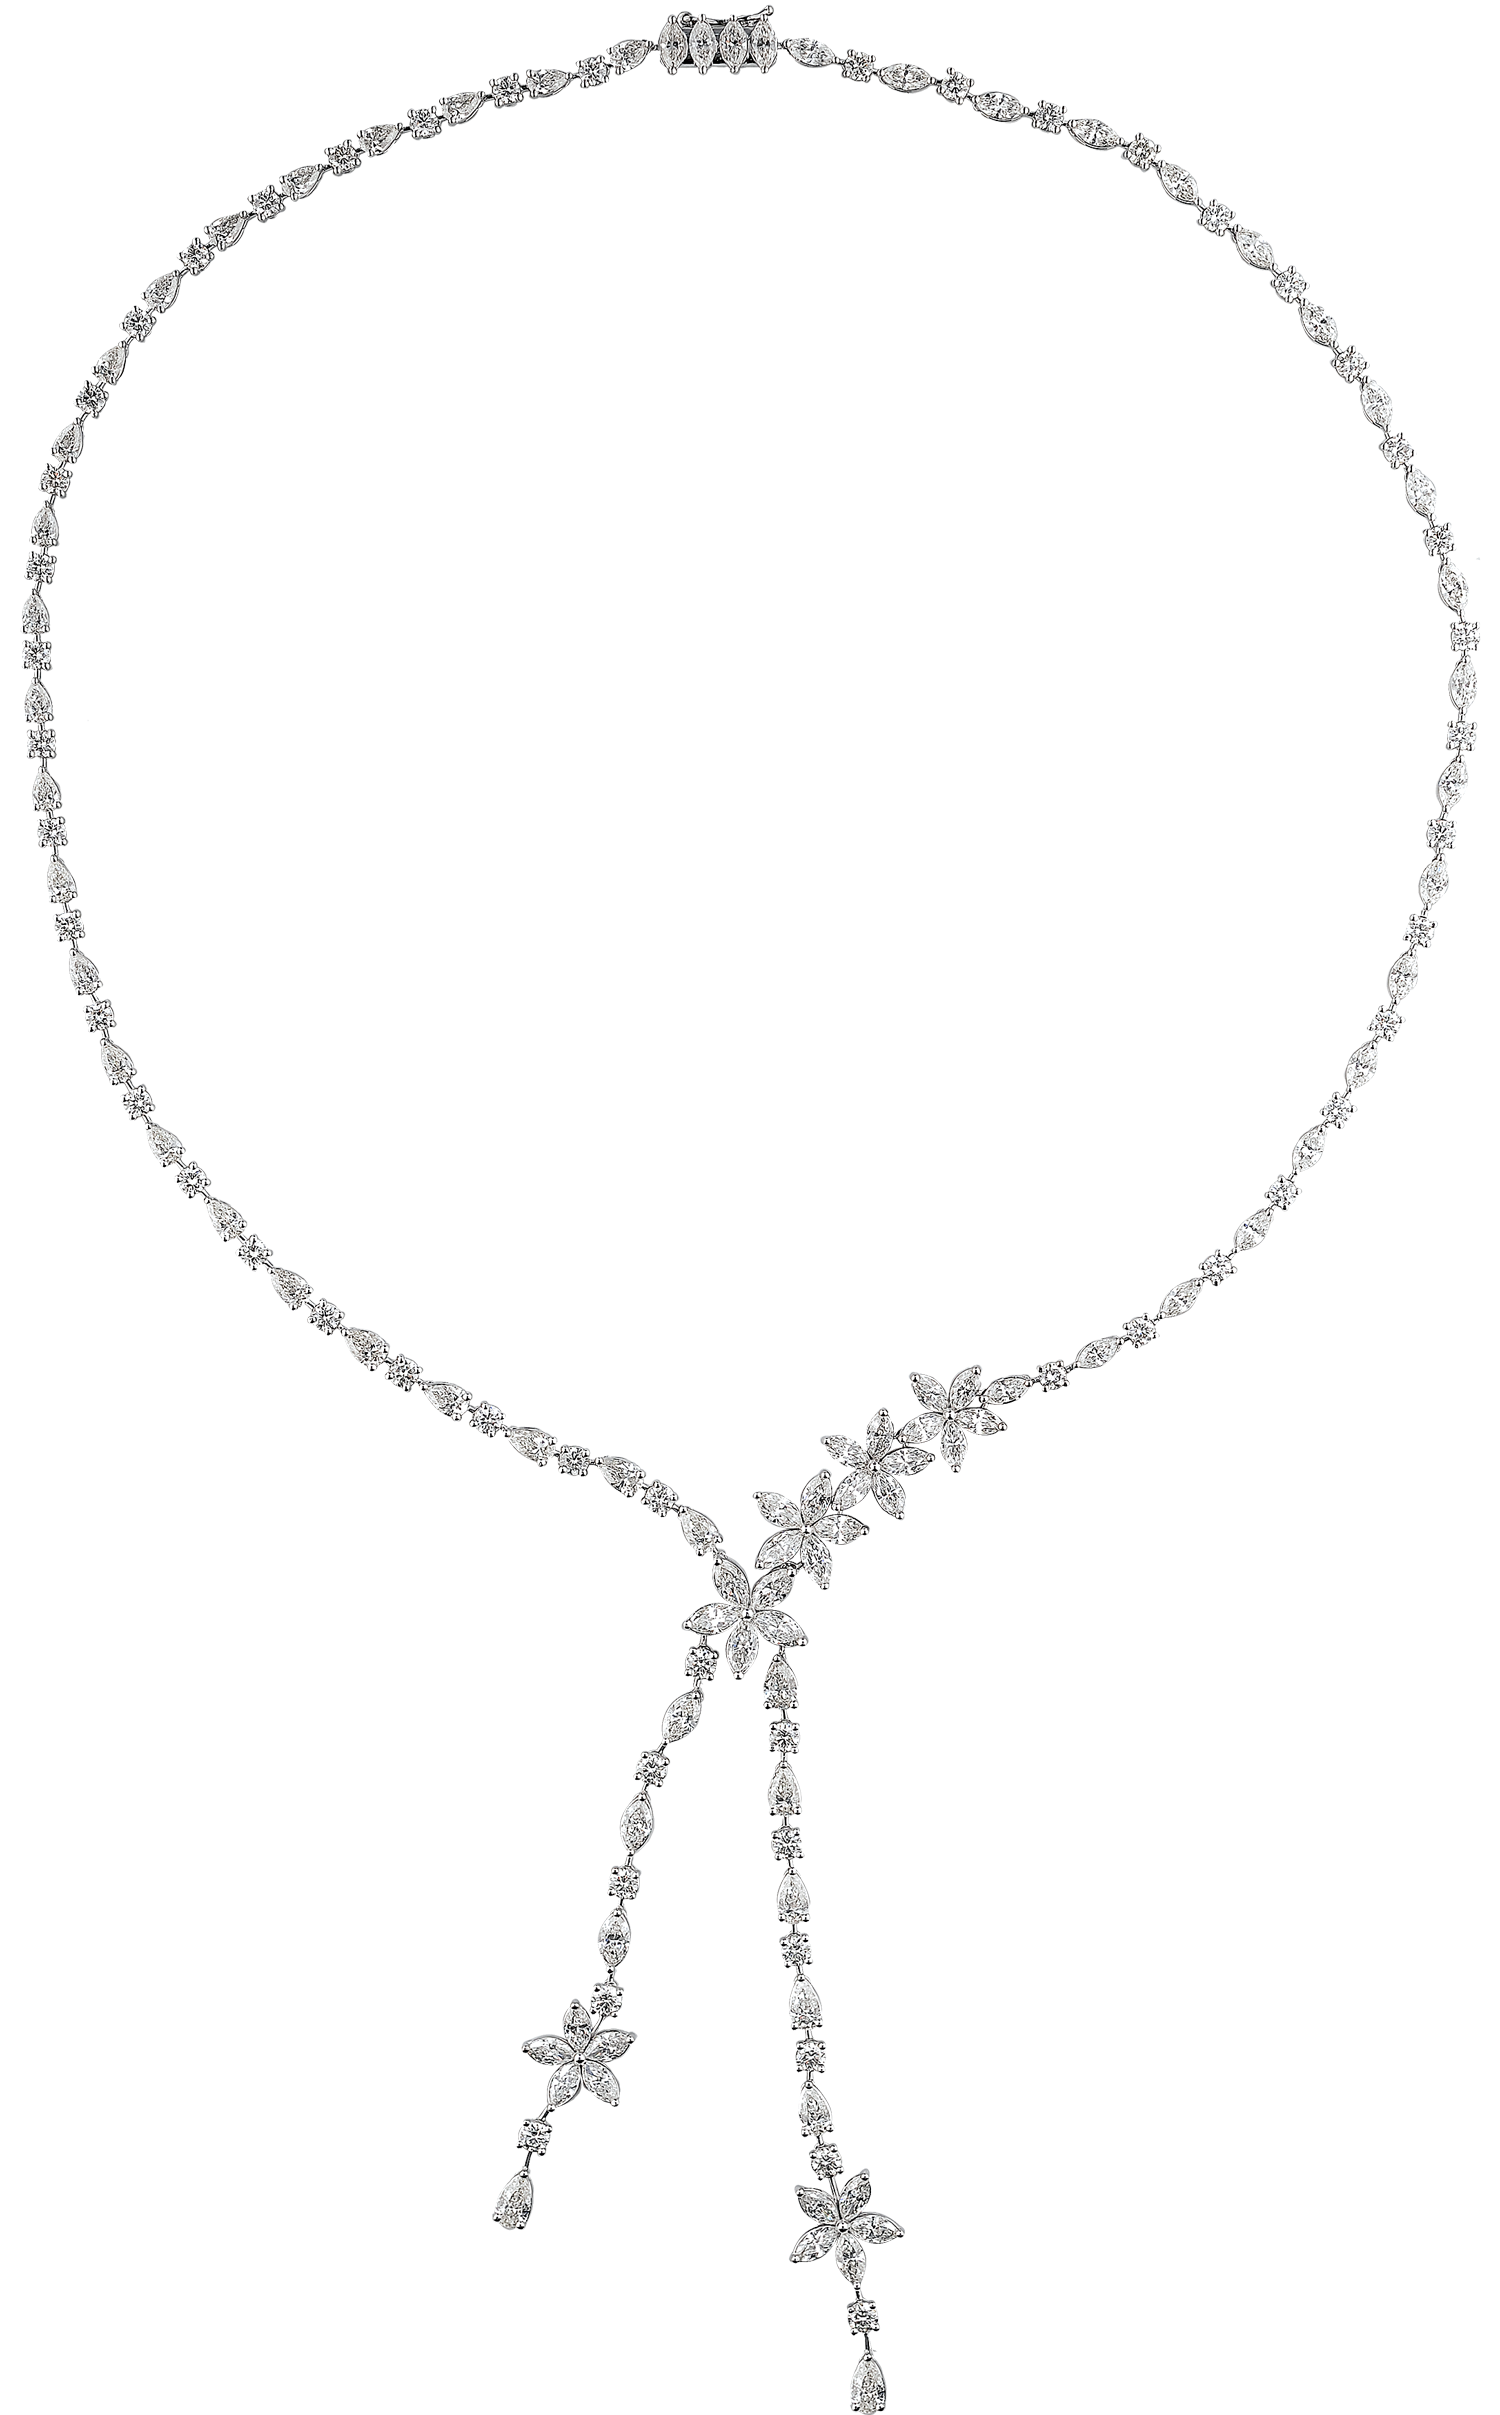 Ralfdiamonds Колье Ralfdiamonds Diamond Necklace 21.60 ct 